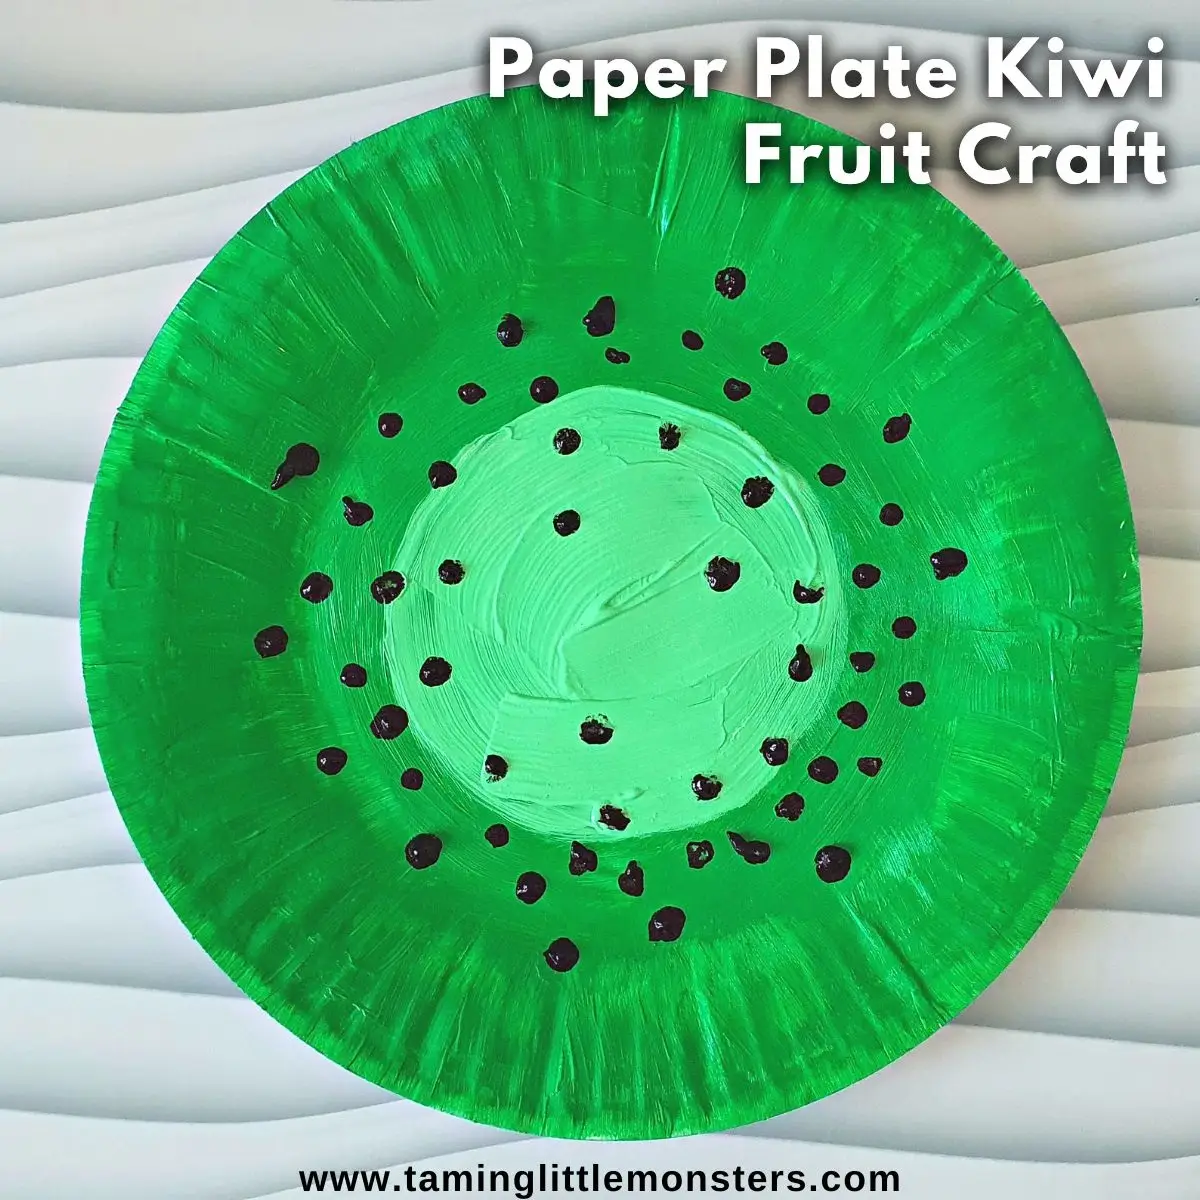 https://taminglittlemonsters.com/wp-content/uploads/2022/11/paper-plate-kiwi-fruit-craft.webp